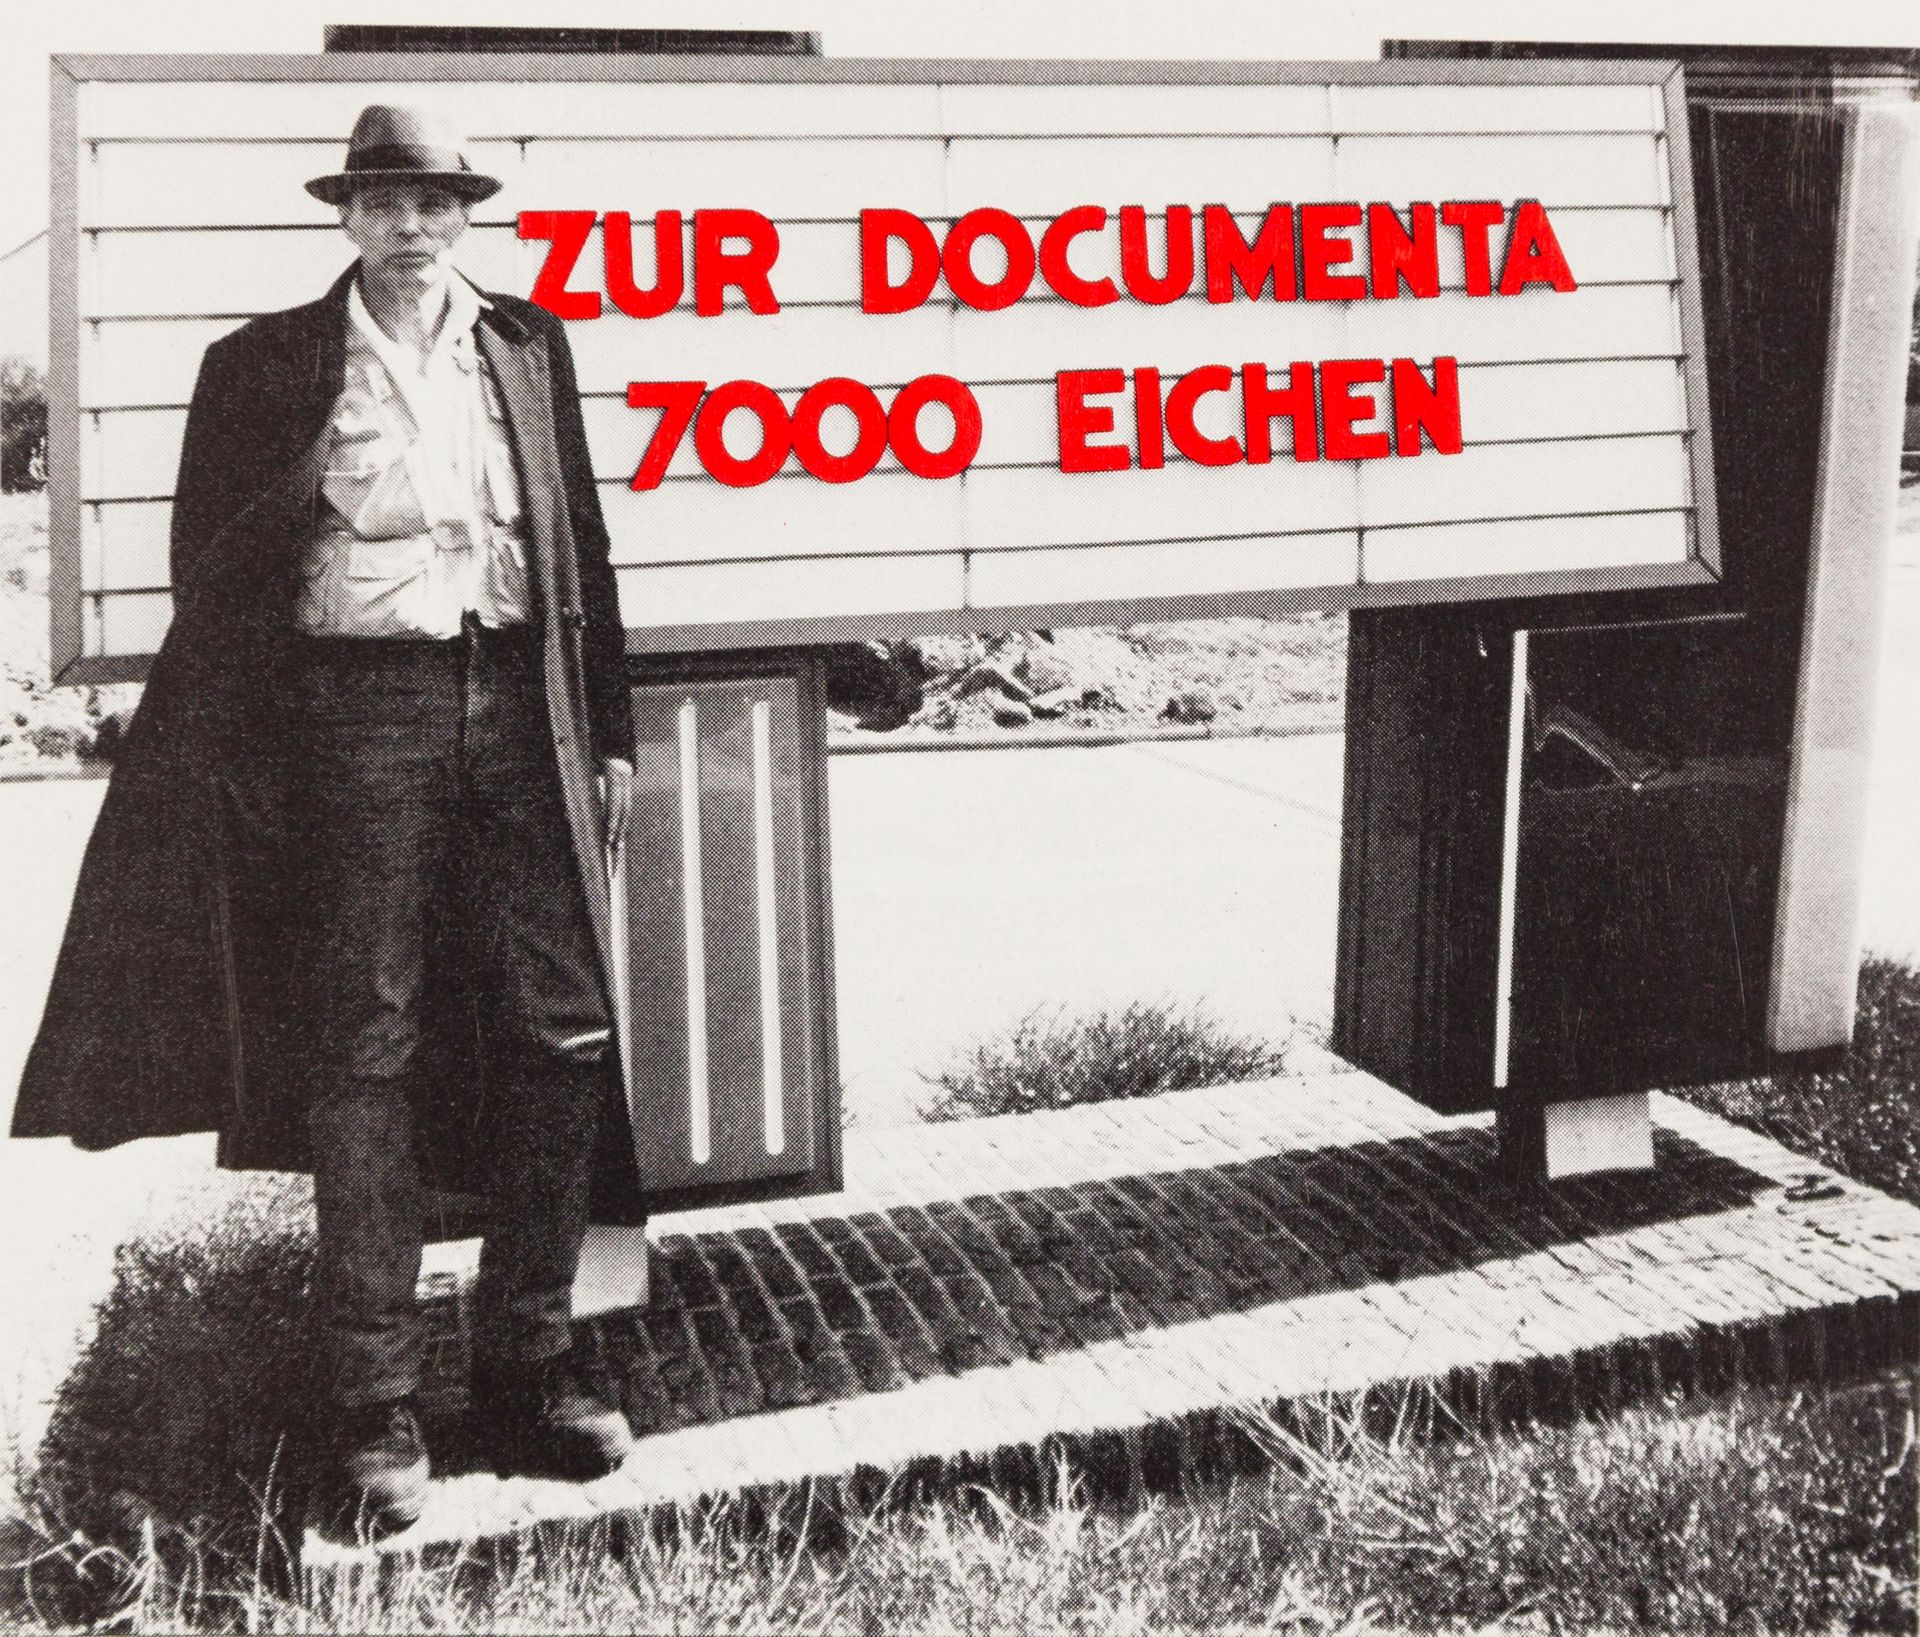 Beuys, Joseph Beuys, Joseph (1921-1986). Documentation "7000 Eichen", documenta &hellip;